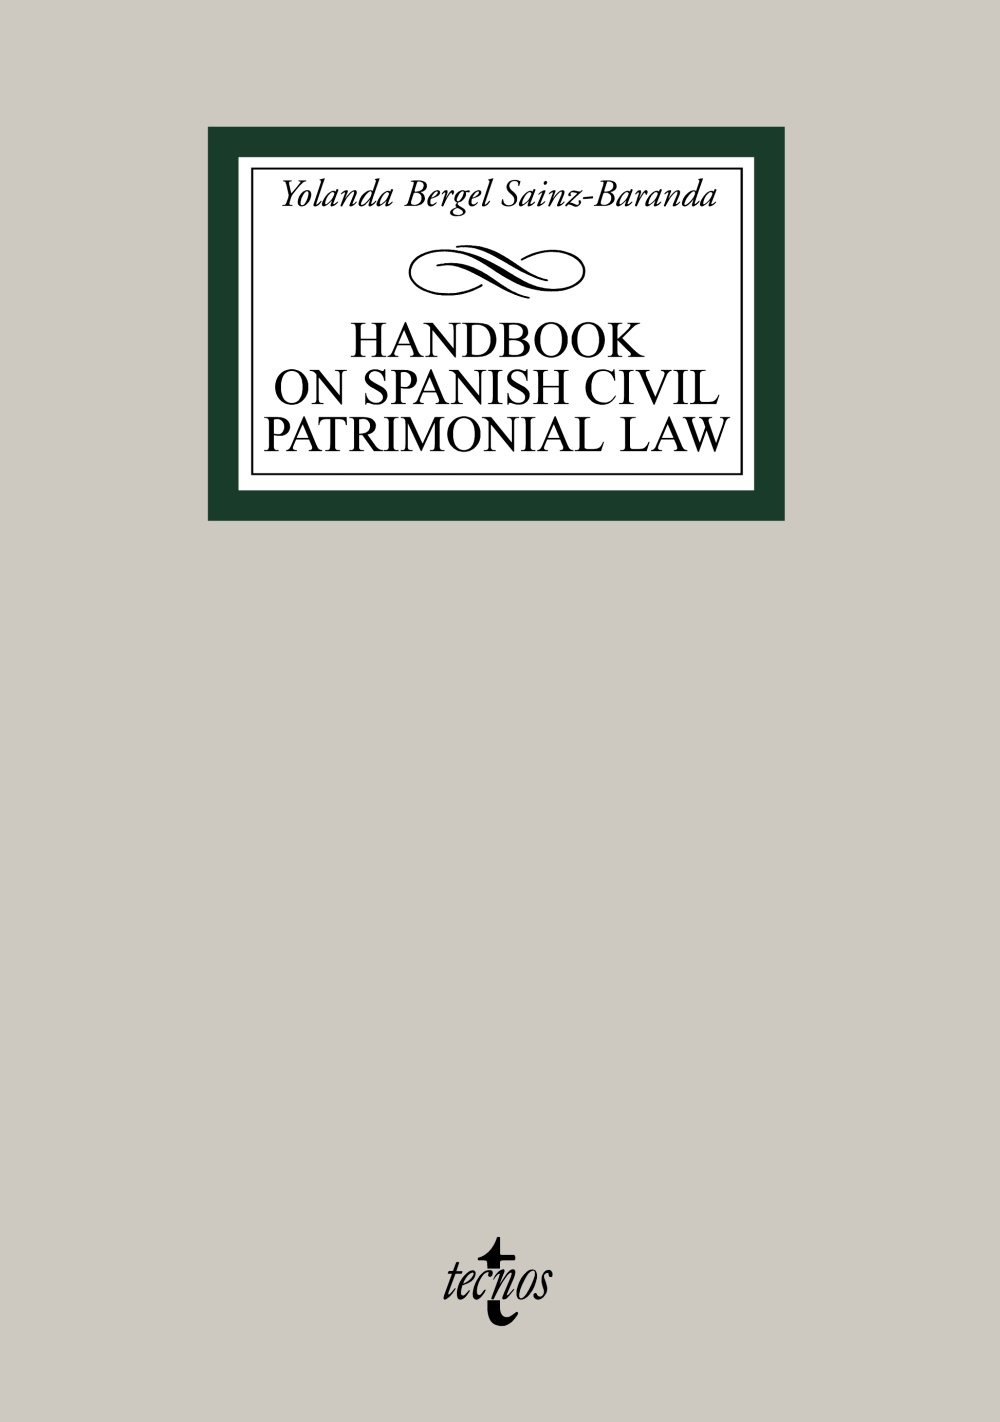 HANDBOOK ON SPANISH CIVIL PATRIMONIAL LAW